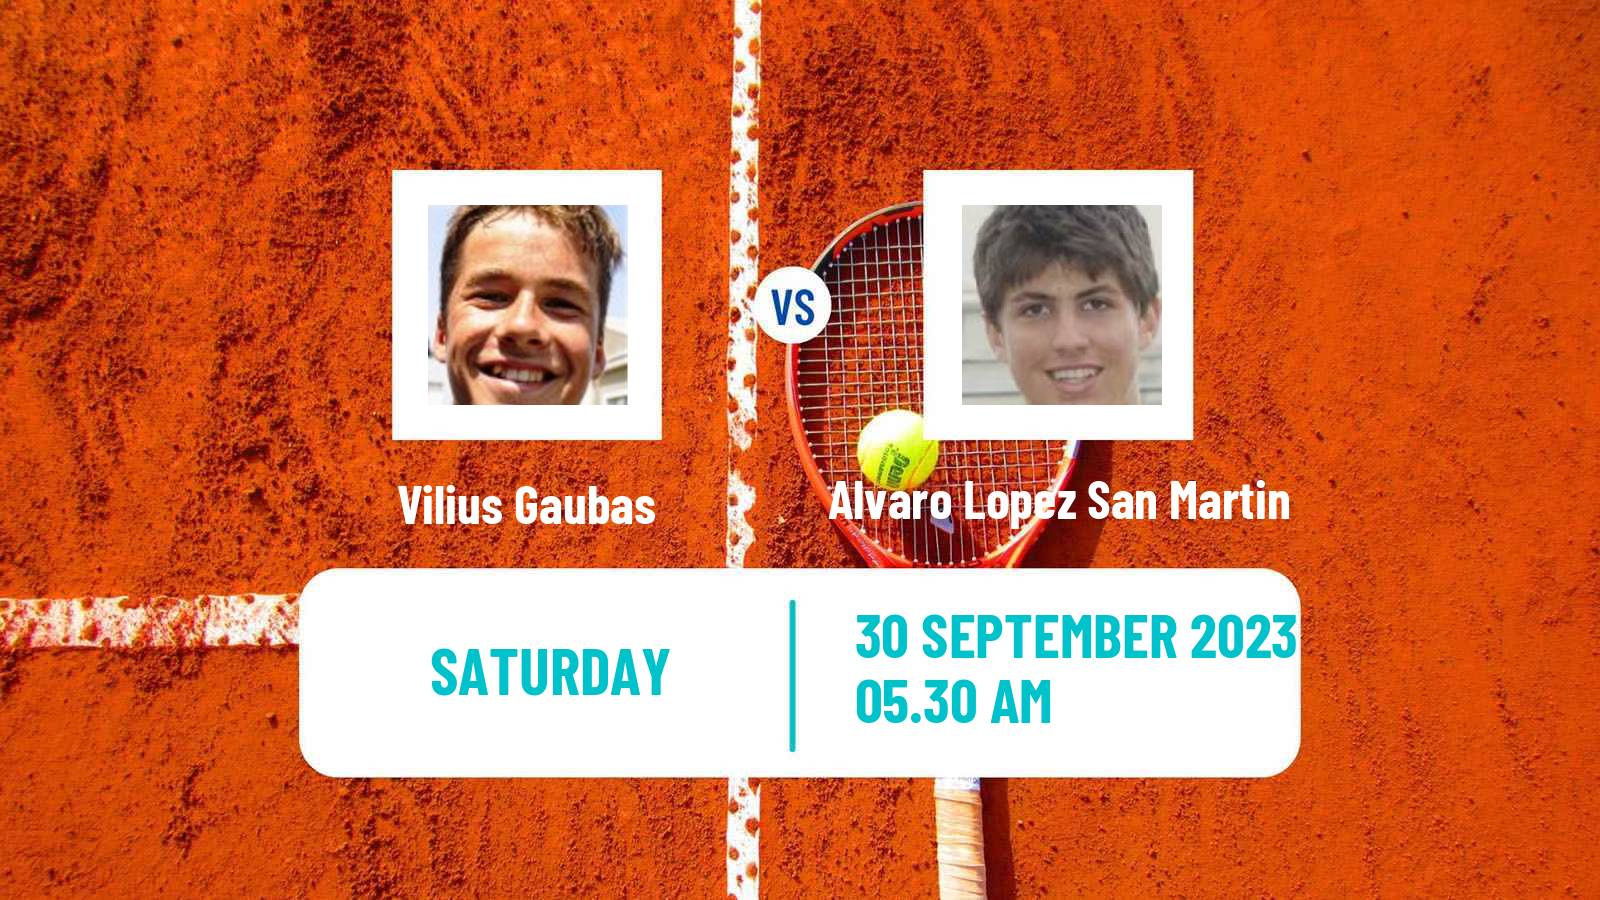 Tennis ITF M25 Sabadell 2 Men Vilius Gaubas - Alvaro Lopez San Martin